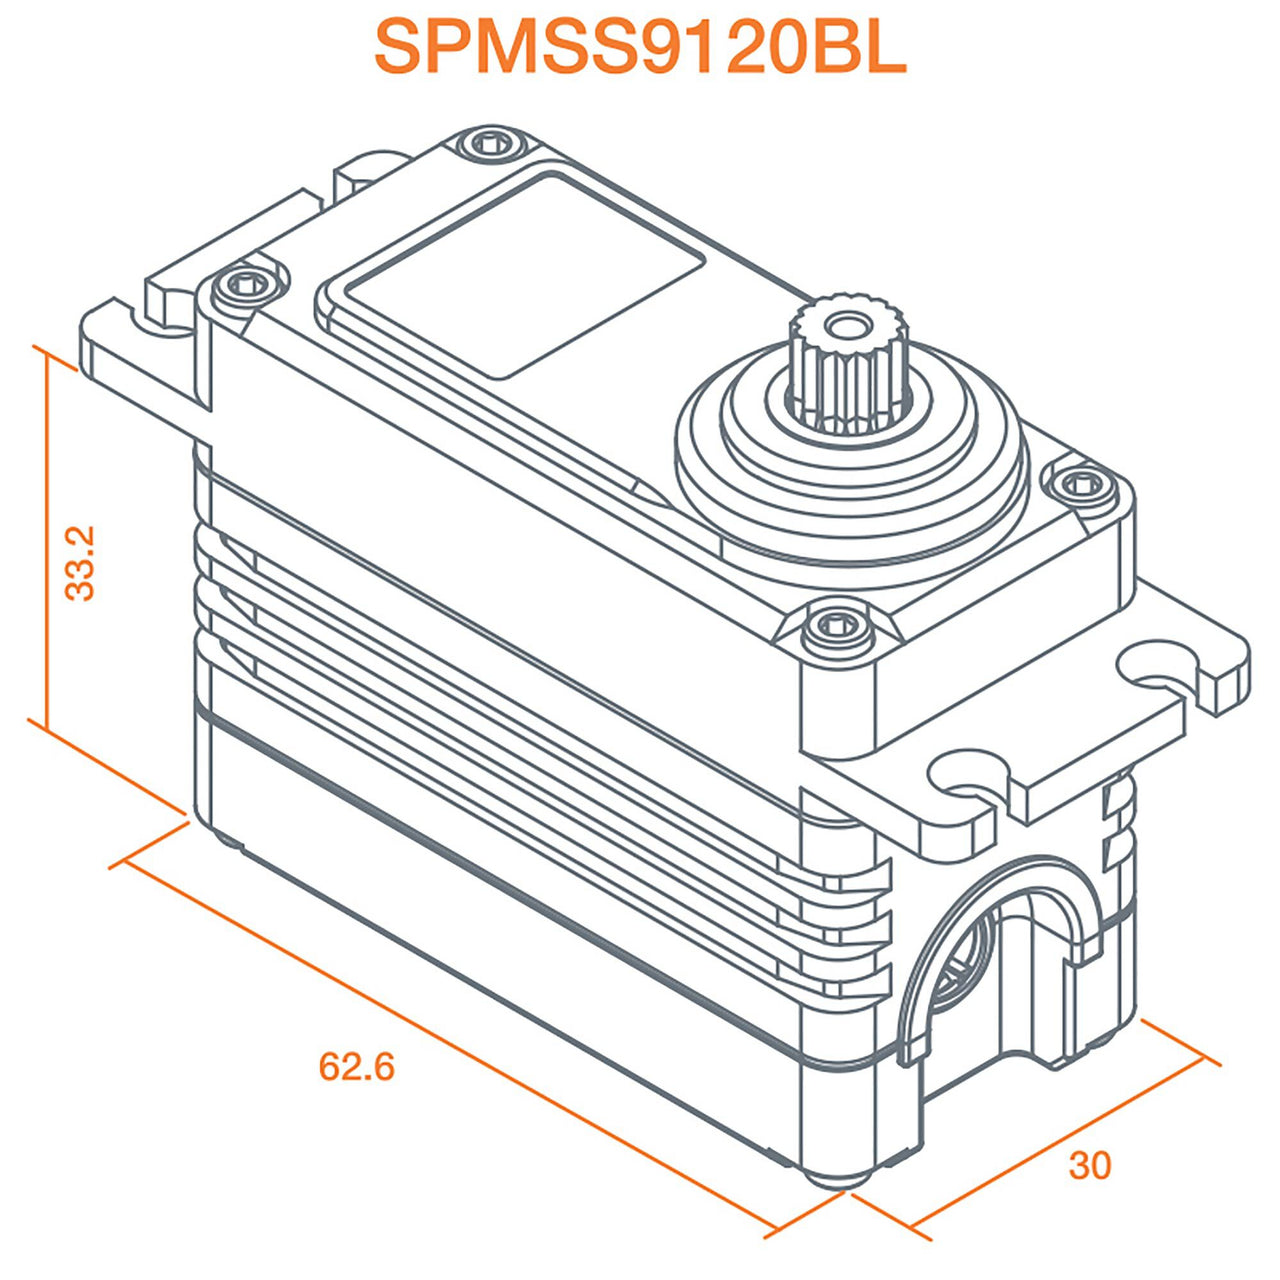 SPMSS9120BL S9120BL 1/5 Digital HV Servo de superficie de engranaje de metal sin escobillas de alto par